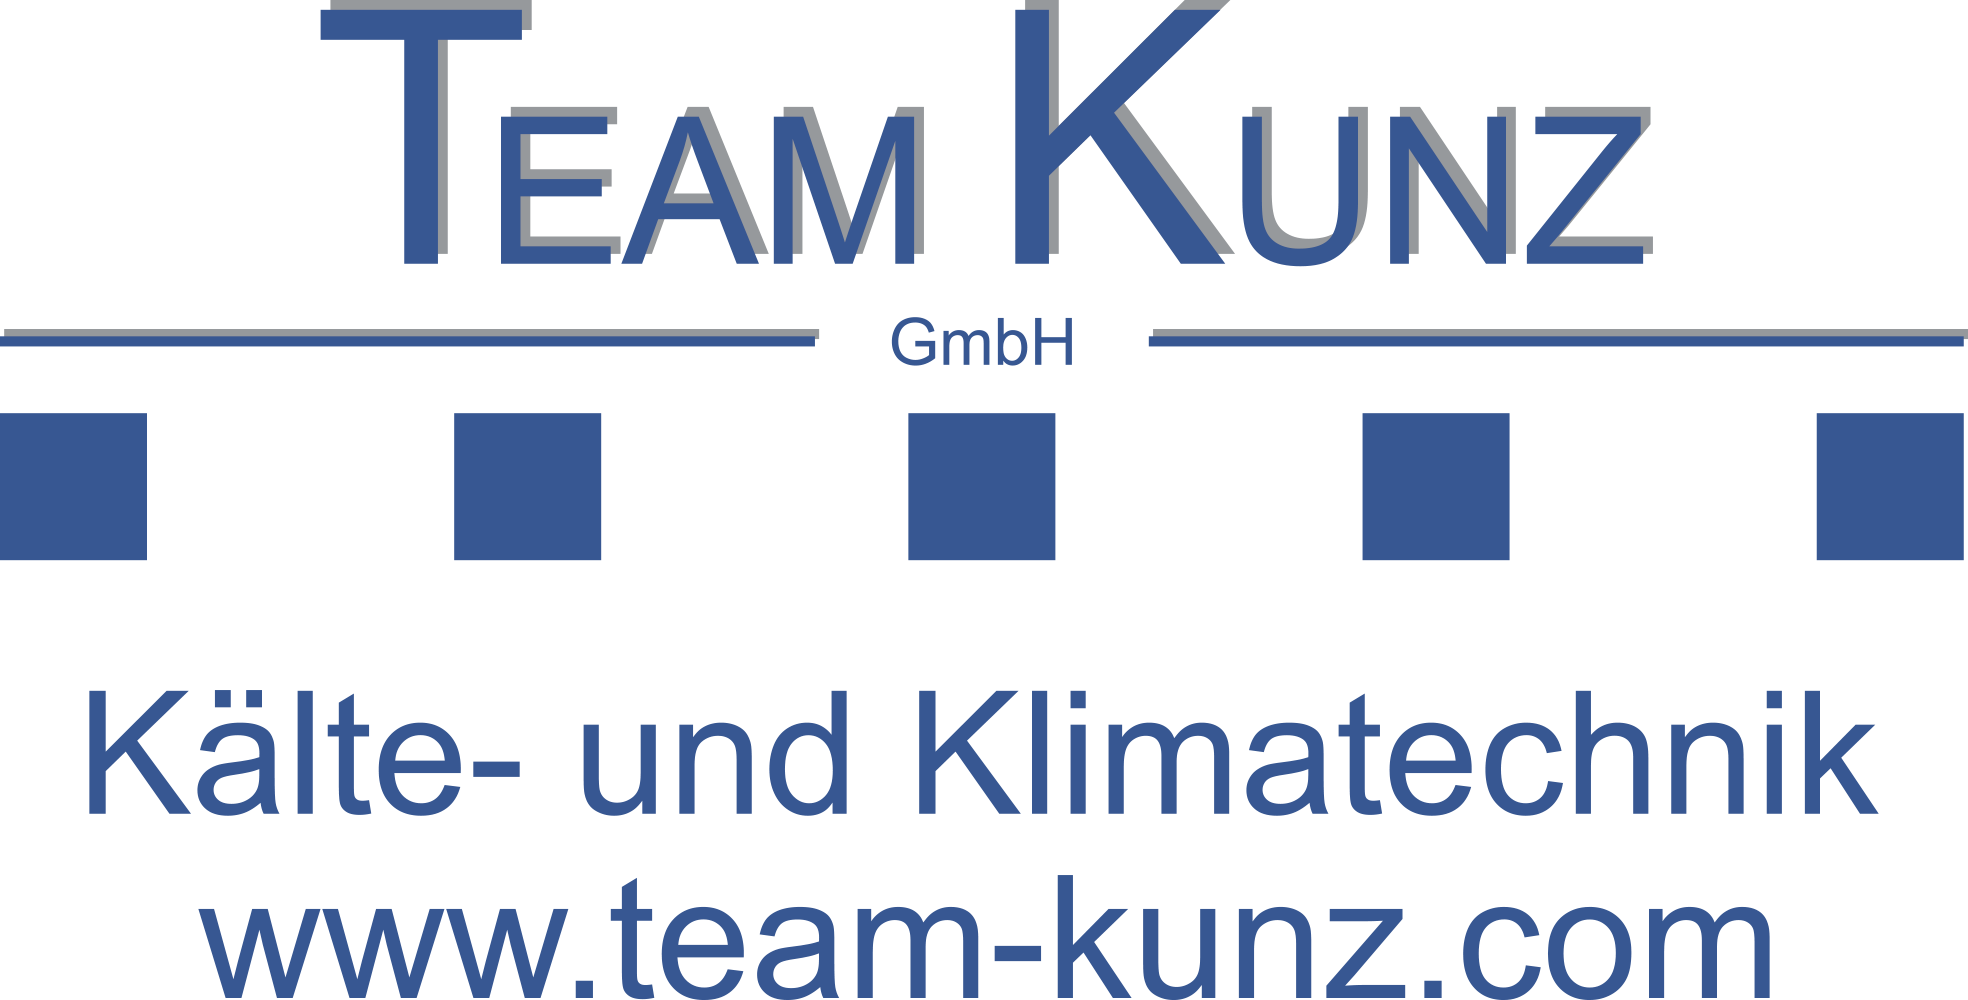 (c) Team-kunz.com